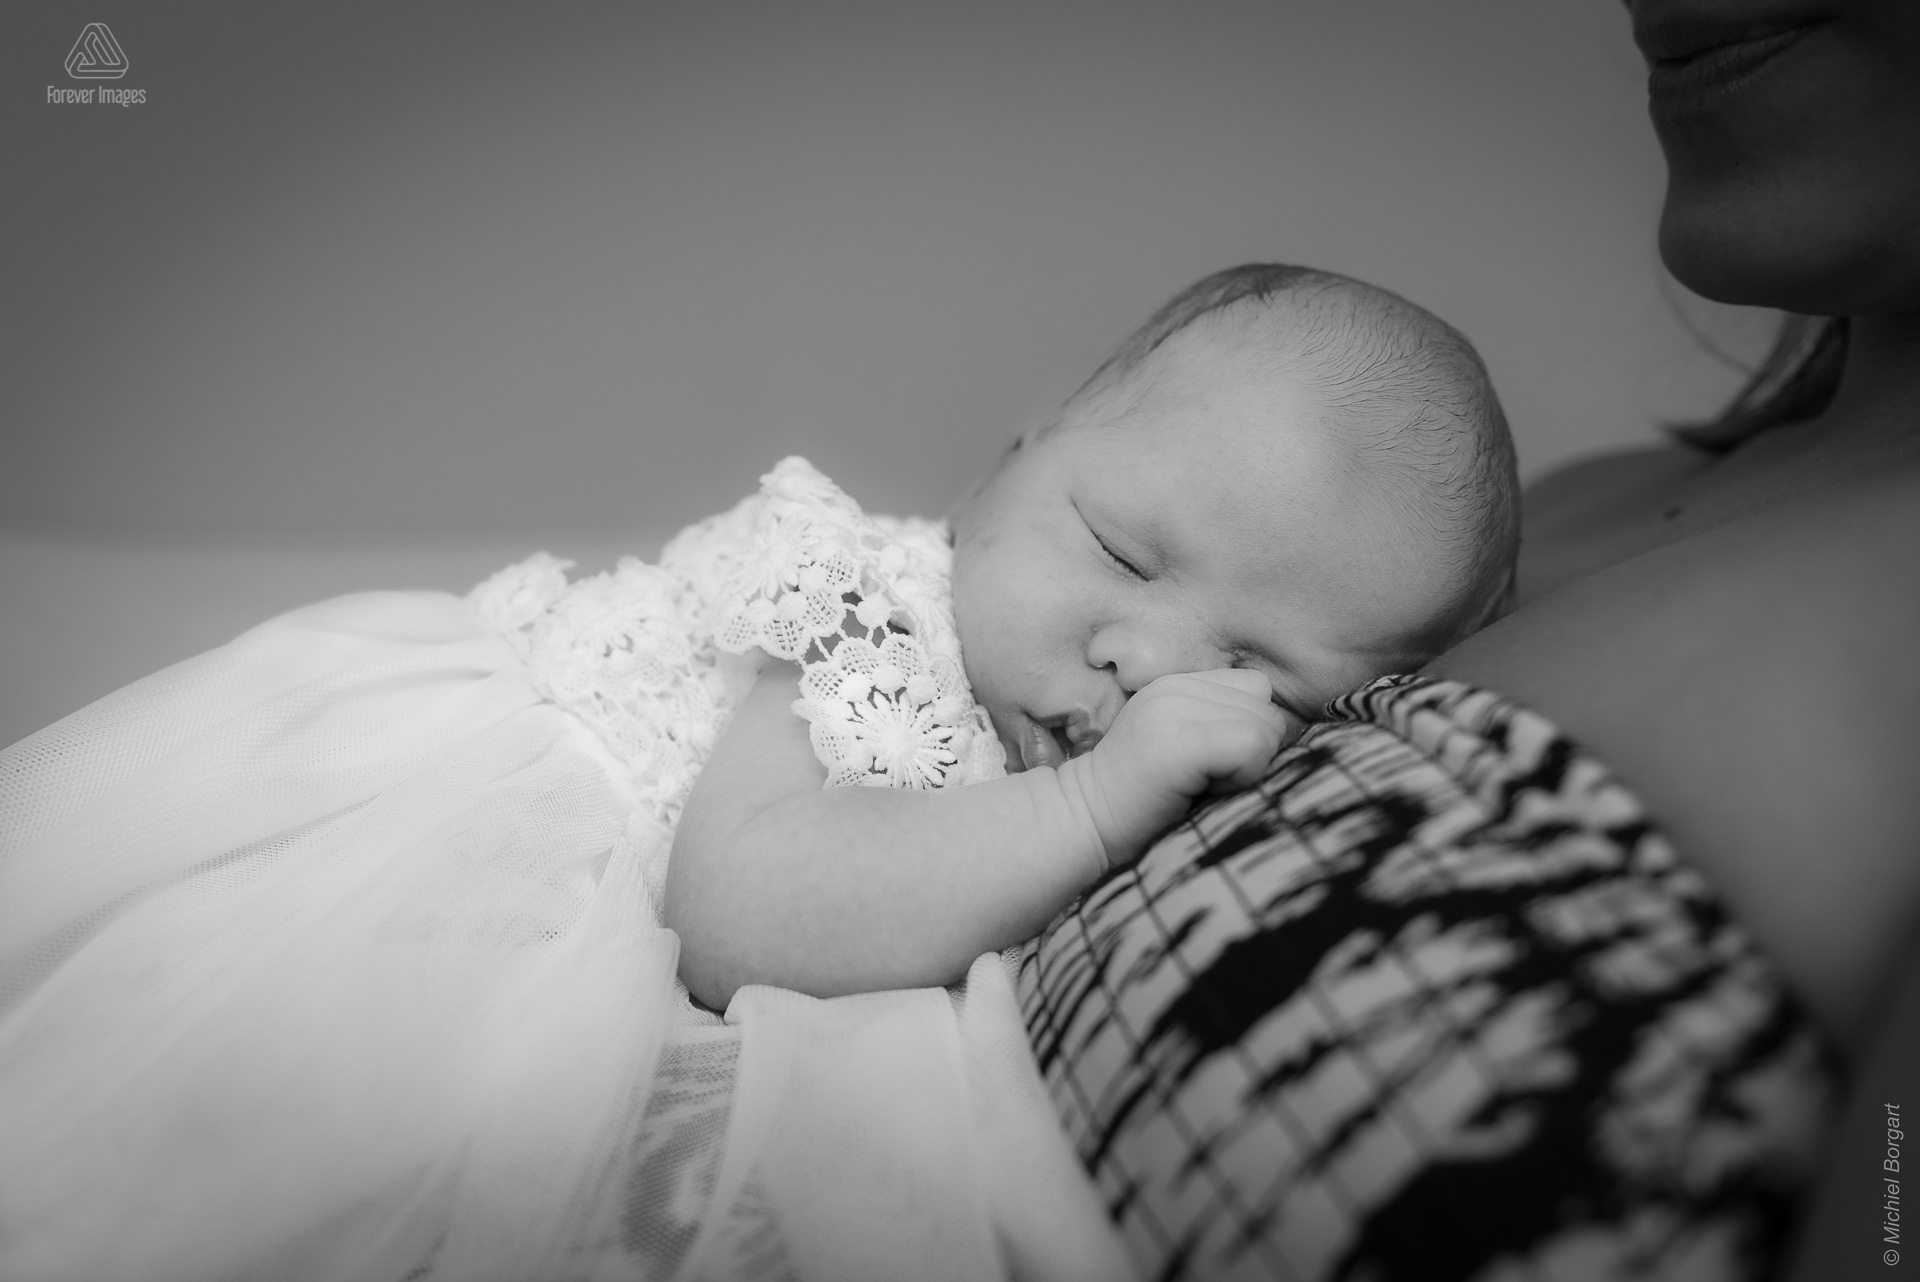 Child photo black and white B&W new born baby on mothers chest | Simone t Hooft-Creutzburg Abigail | Portrait Photographer Michiel Borgart - Forever Images.